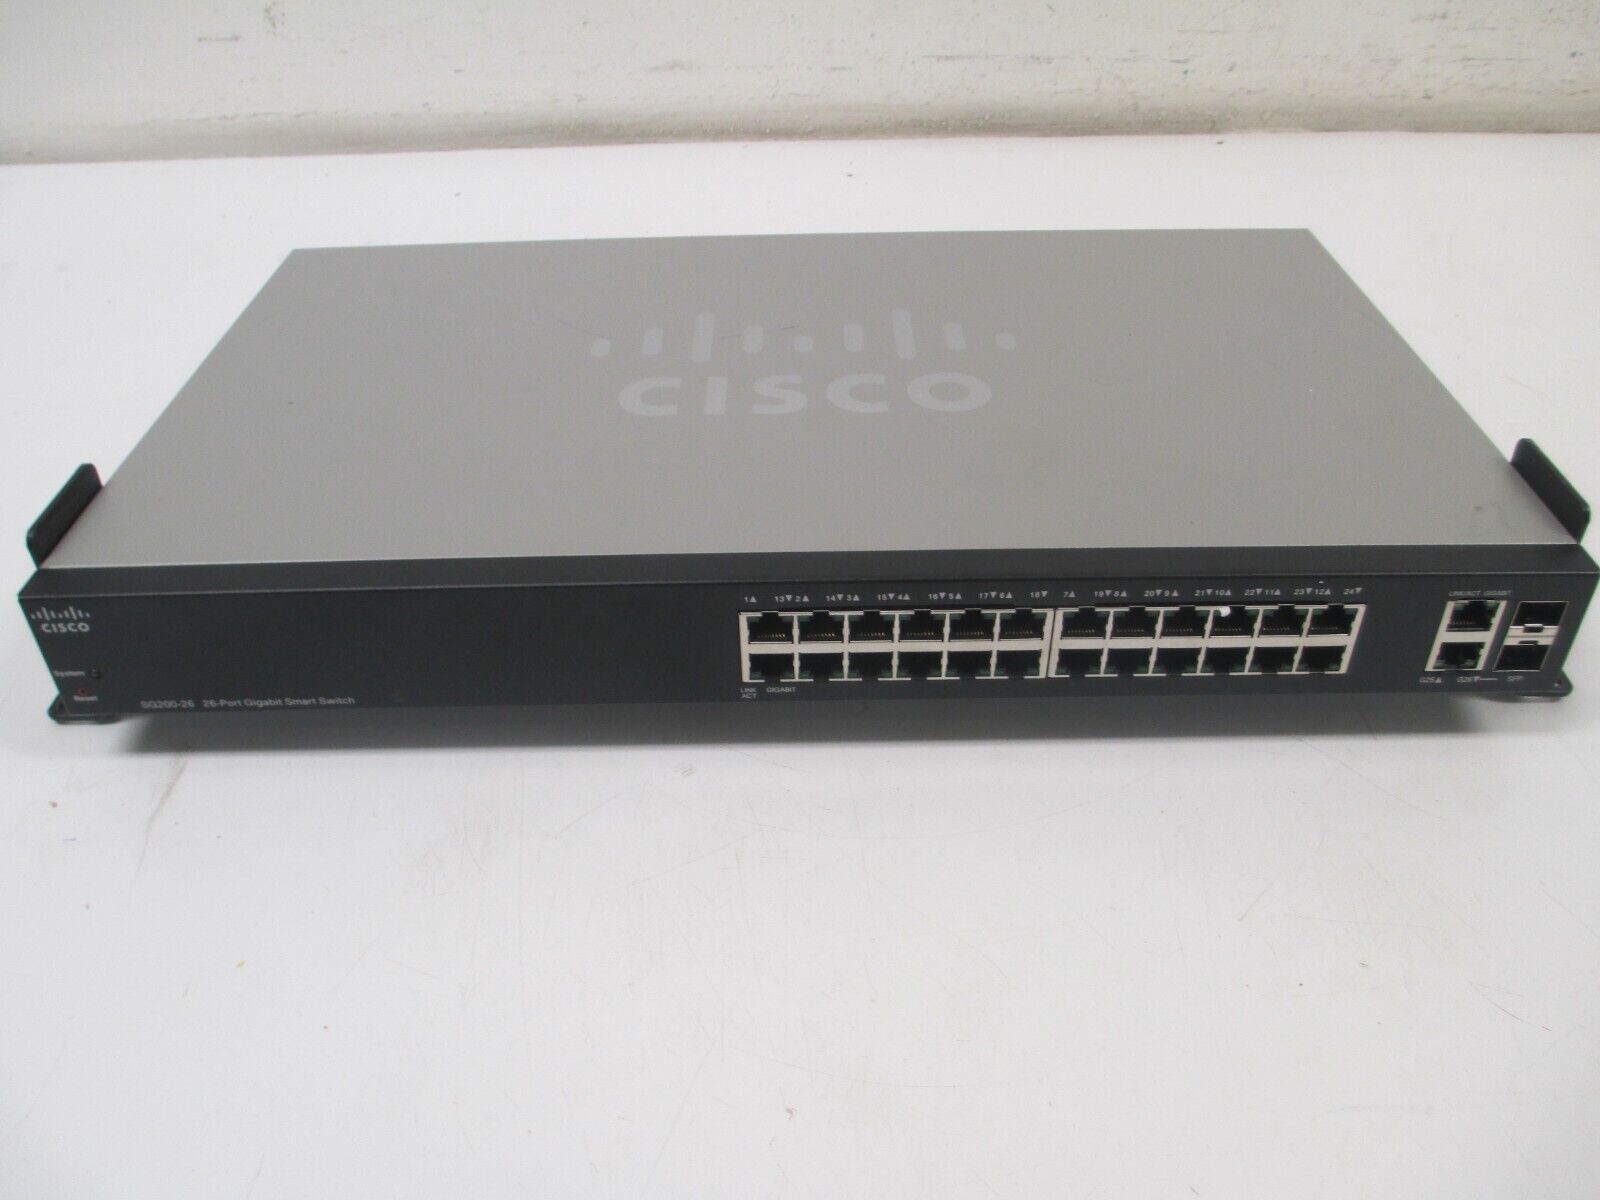 Cisco SG200-26 Gigabit 26 Port PoE SMart Switch